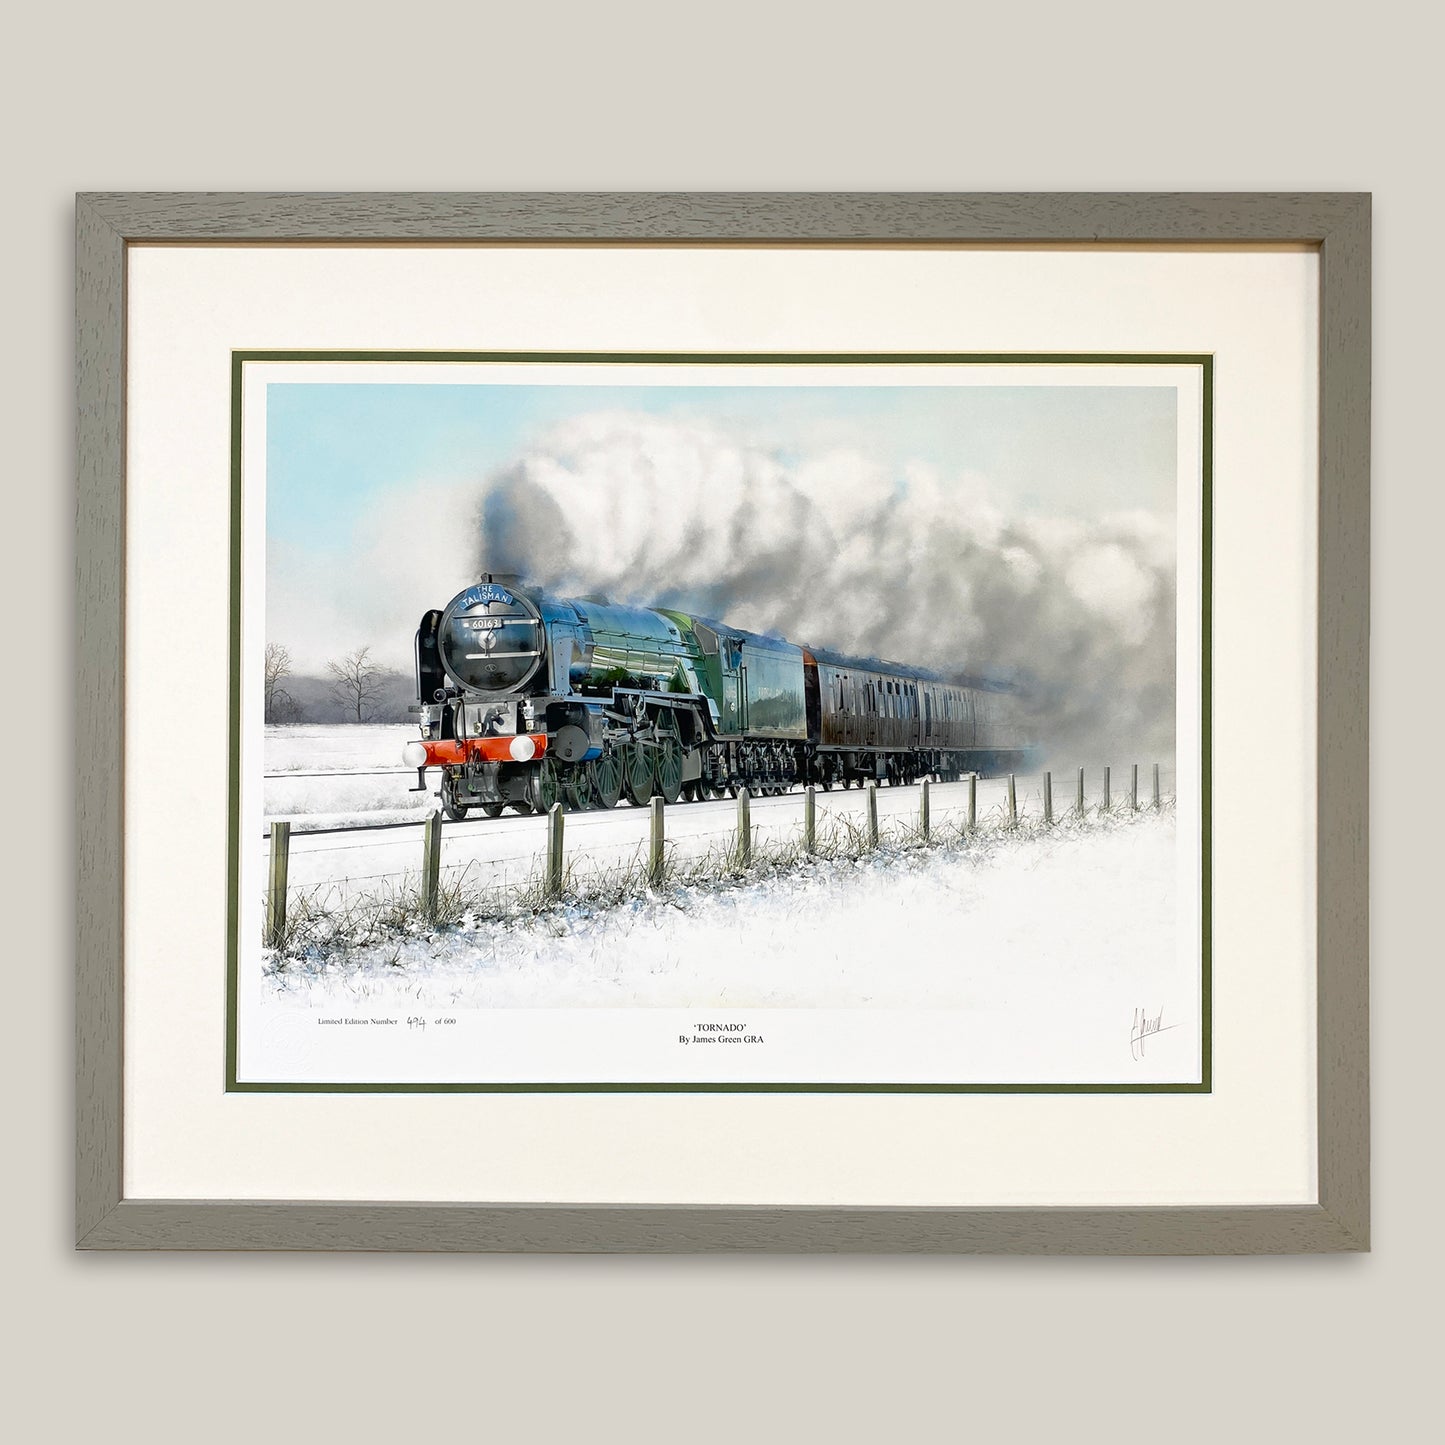 Tornado steam train in the snow